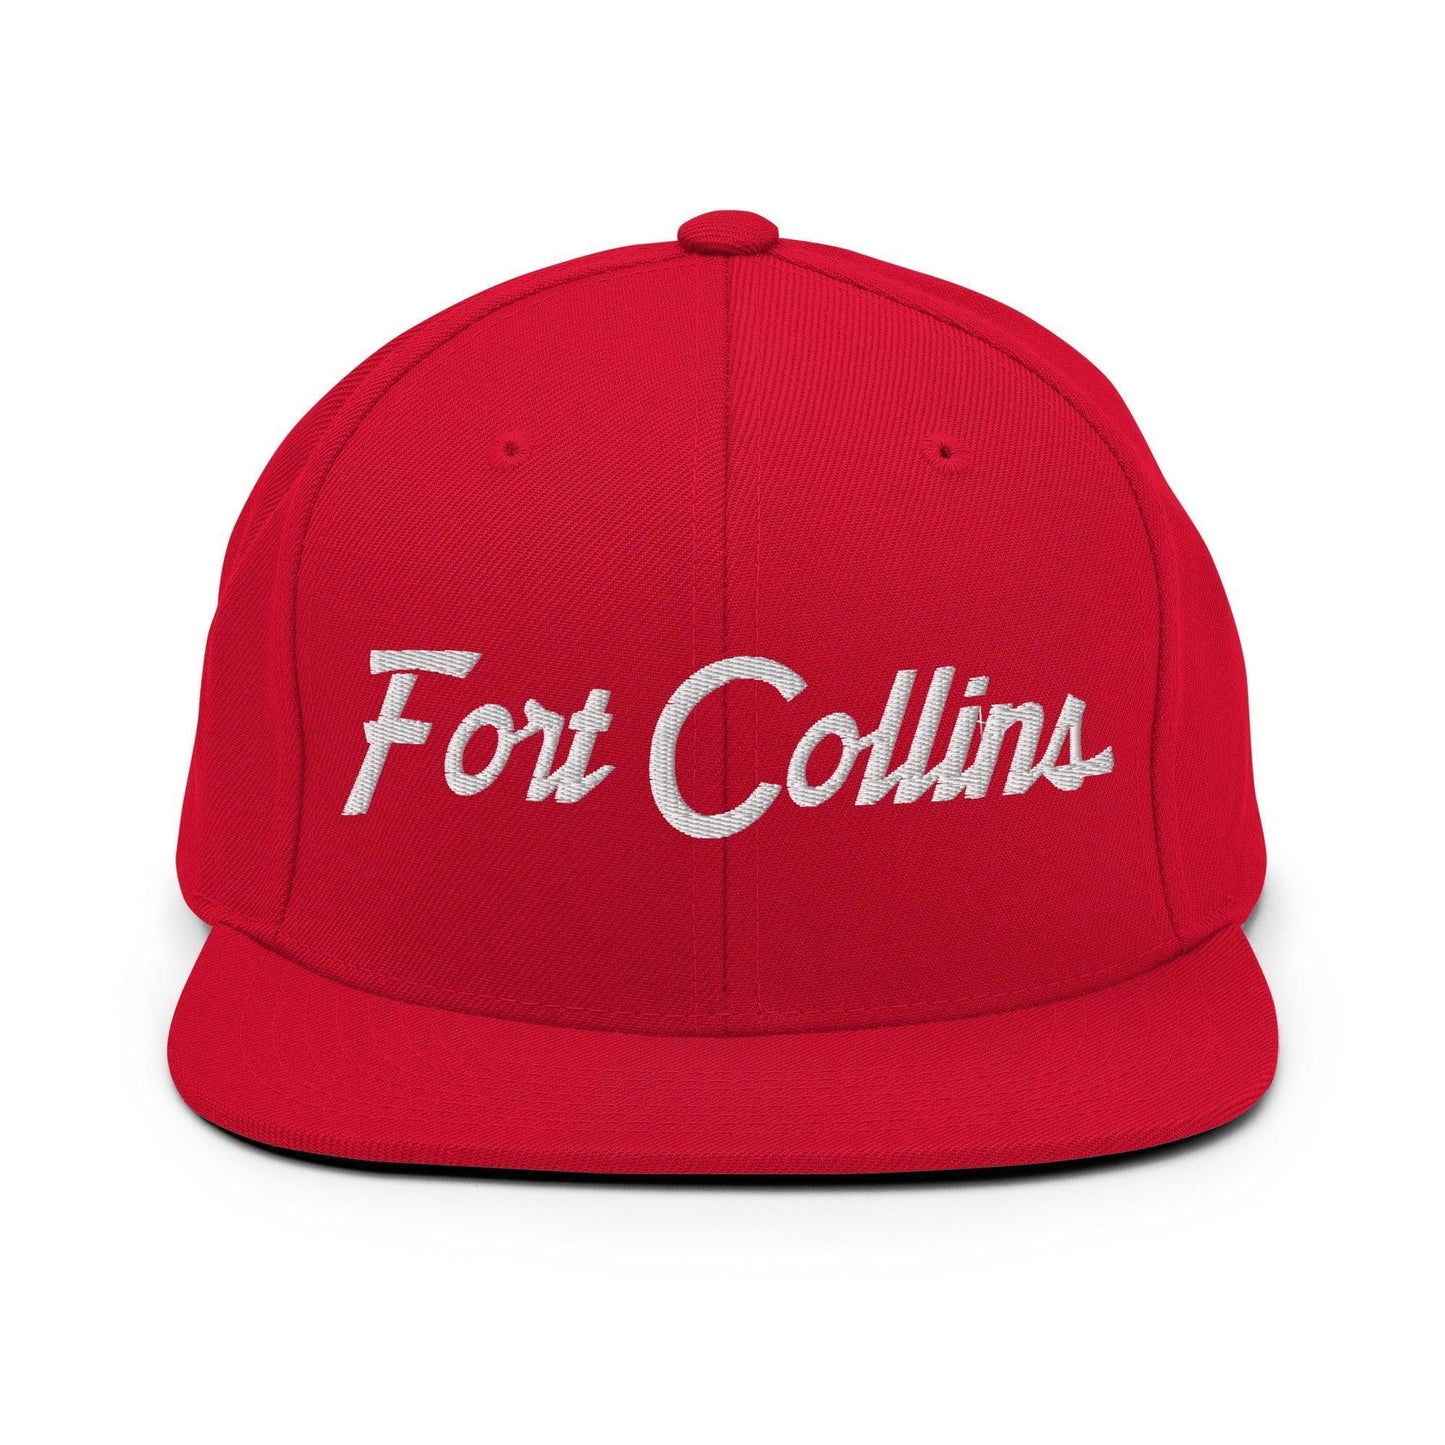 Fort Collins Script Snapback Hat Red